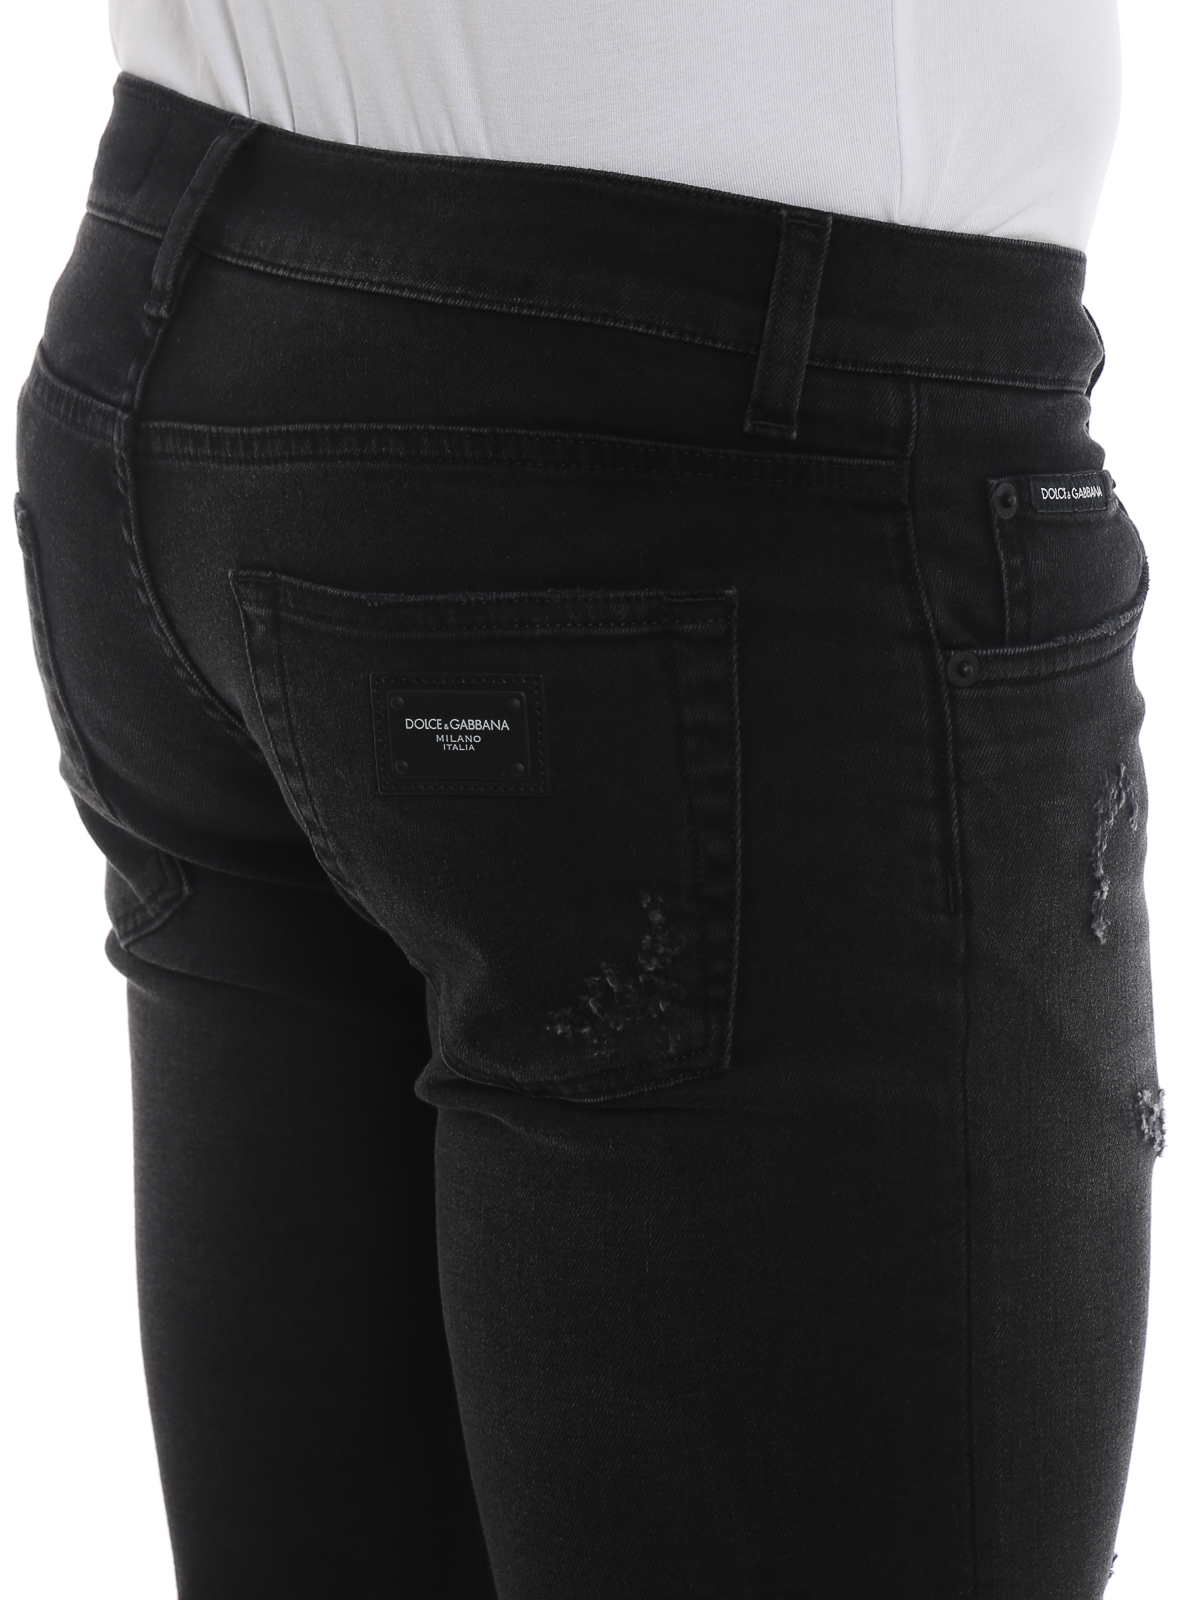 Skinny jeans Dolce & Gabbana - Ripped stretch denim black jeans -  GY07LDG8AN5S9001